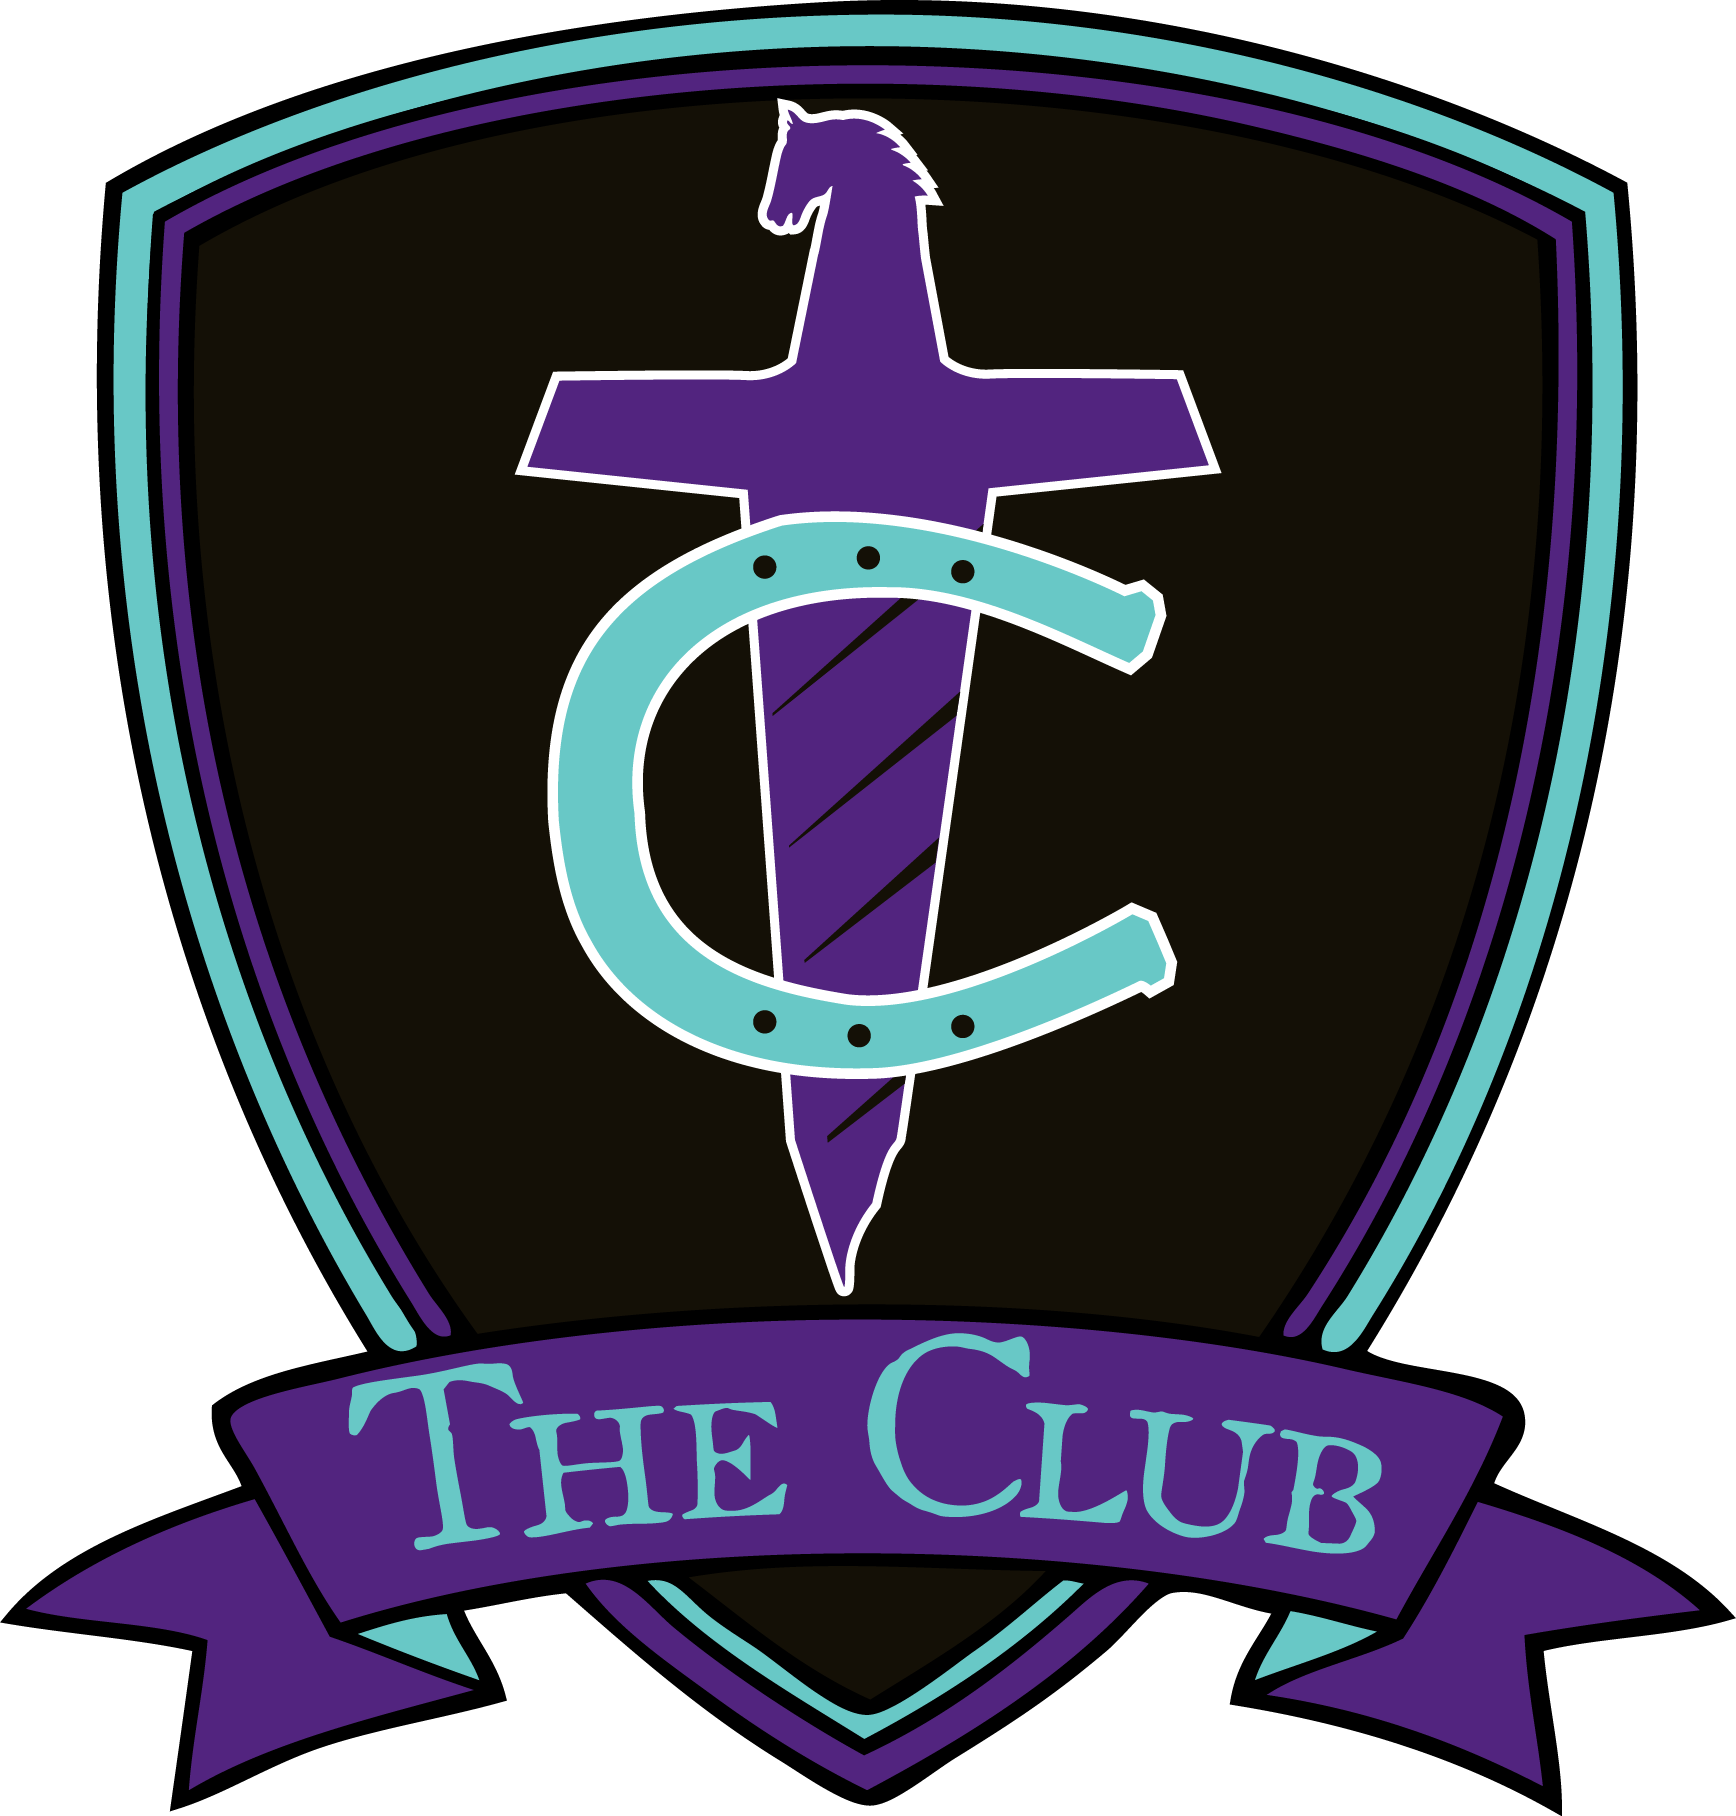 The Thoroughbred Club, Llc - The Thoroughbred Club Of America (1736x1816)